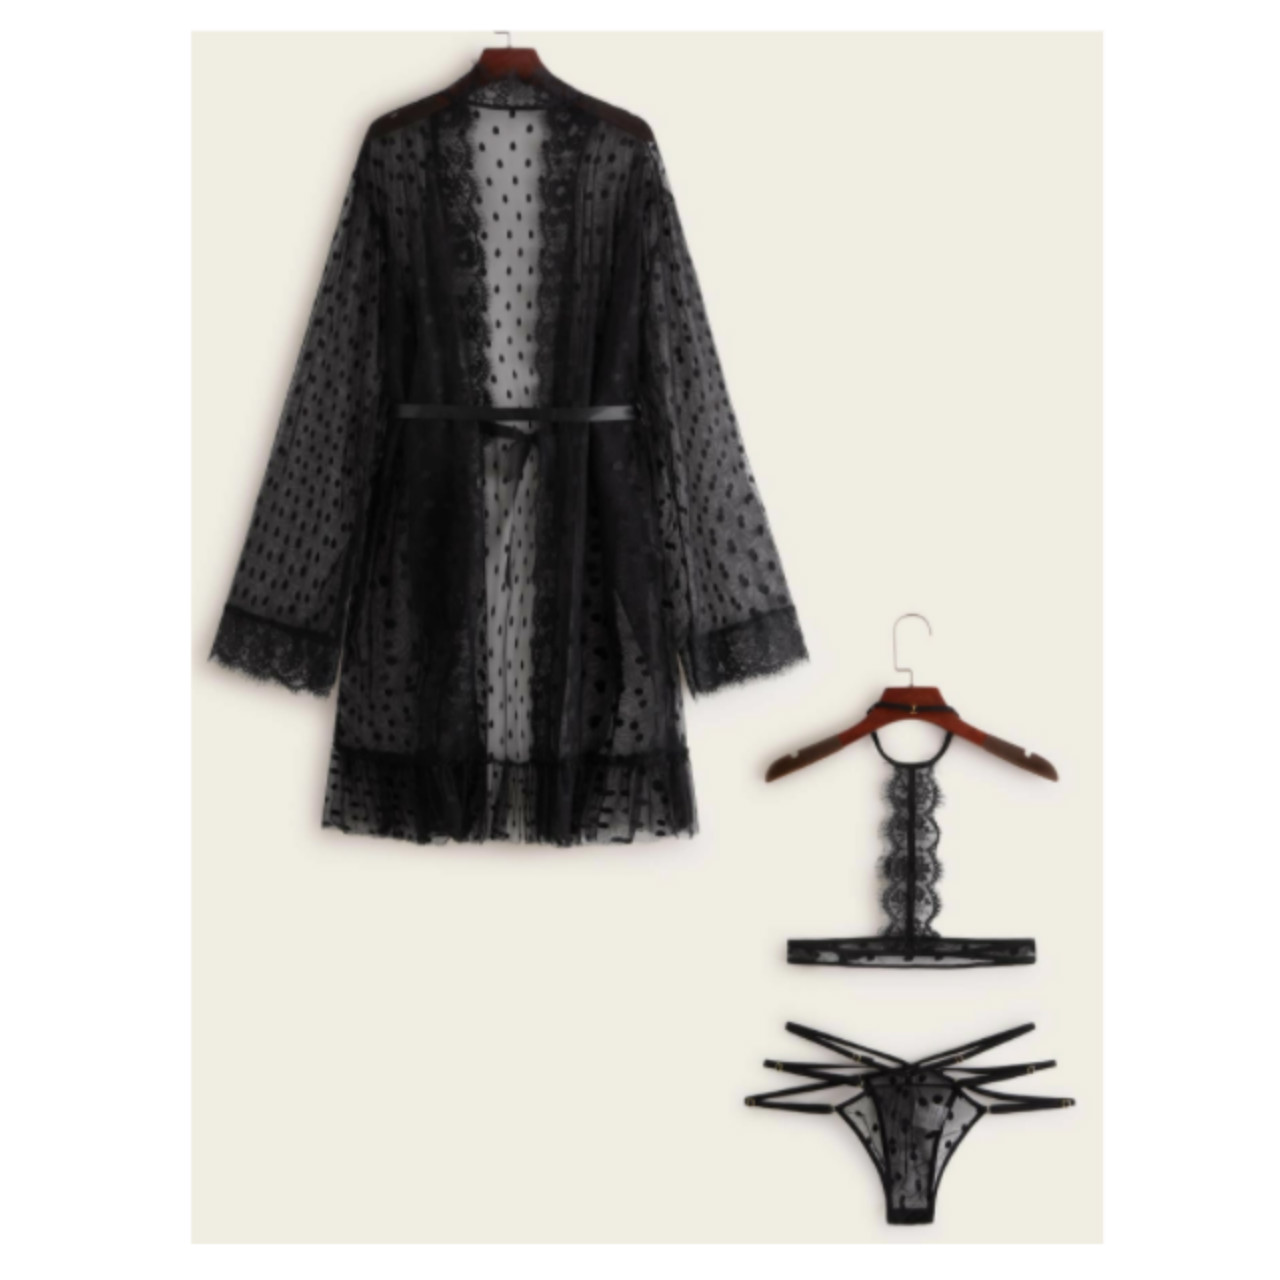 Eyelash lace lingerie choker with mesh thong & robe s